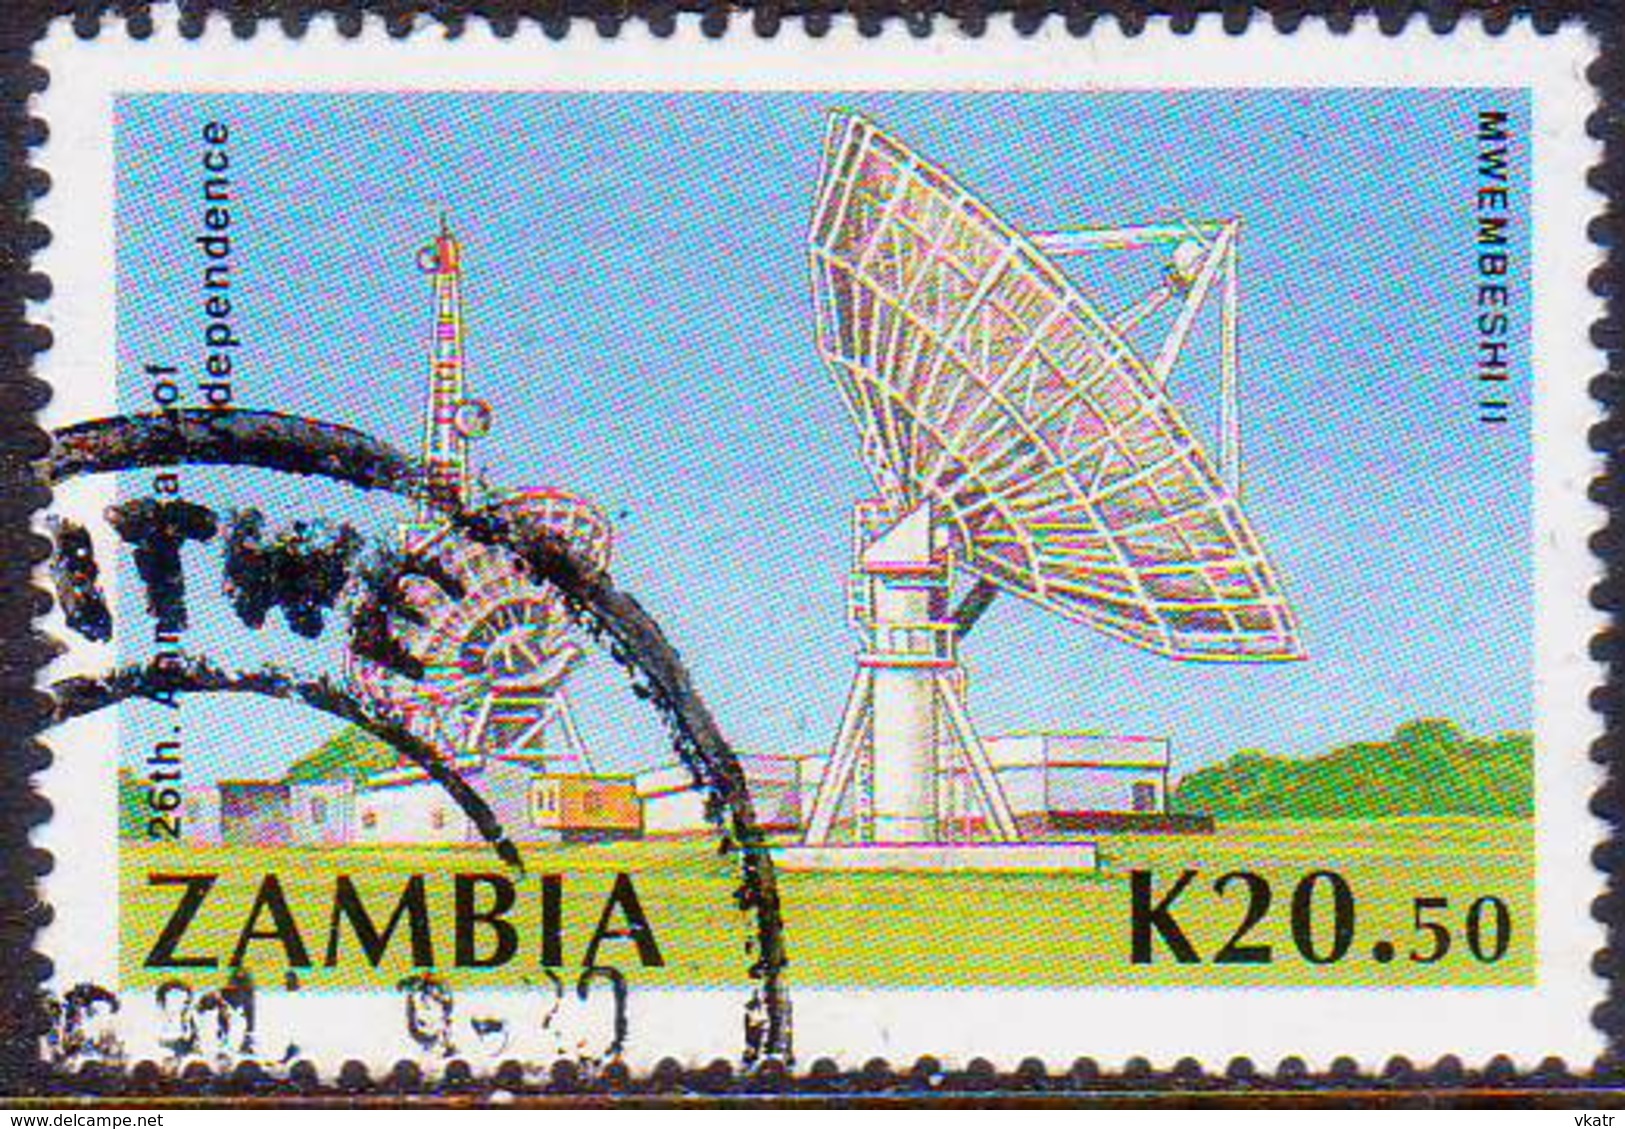 ZAMBIA 1990 SG #623  Used 20k.50 Satelite Earth Station - Zambia (1965-...)